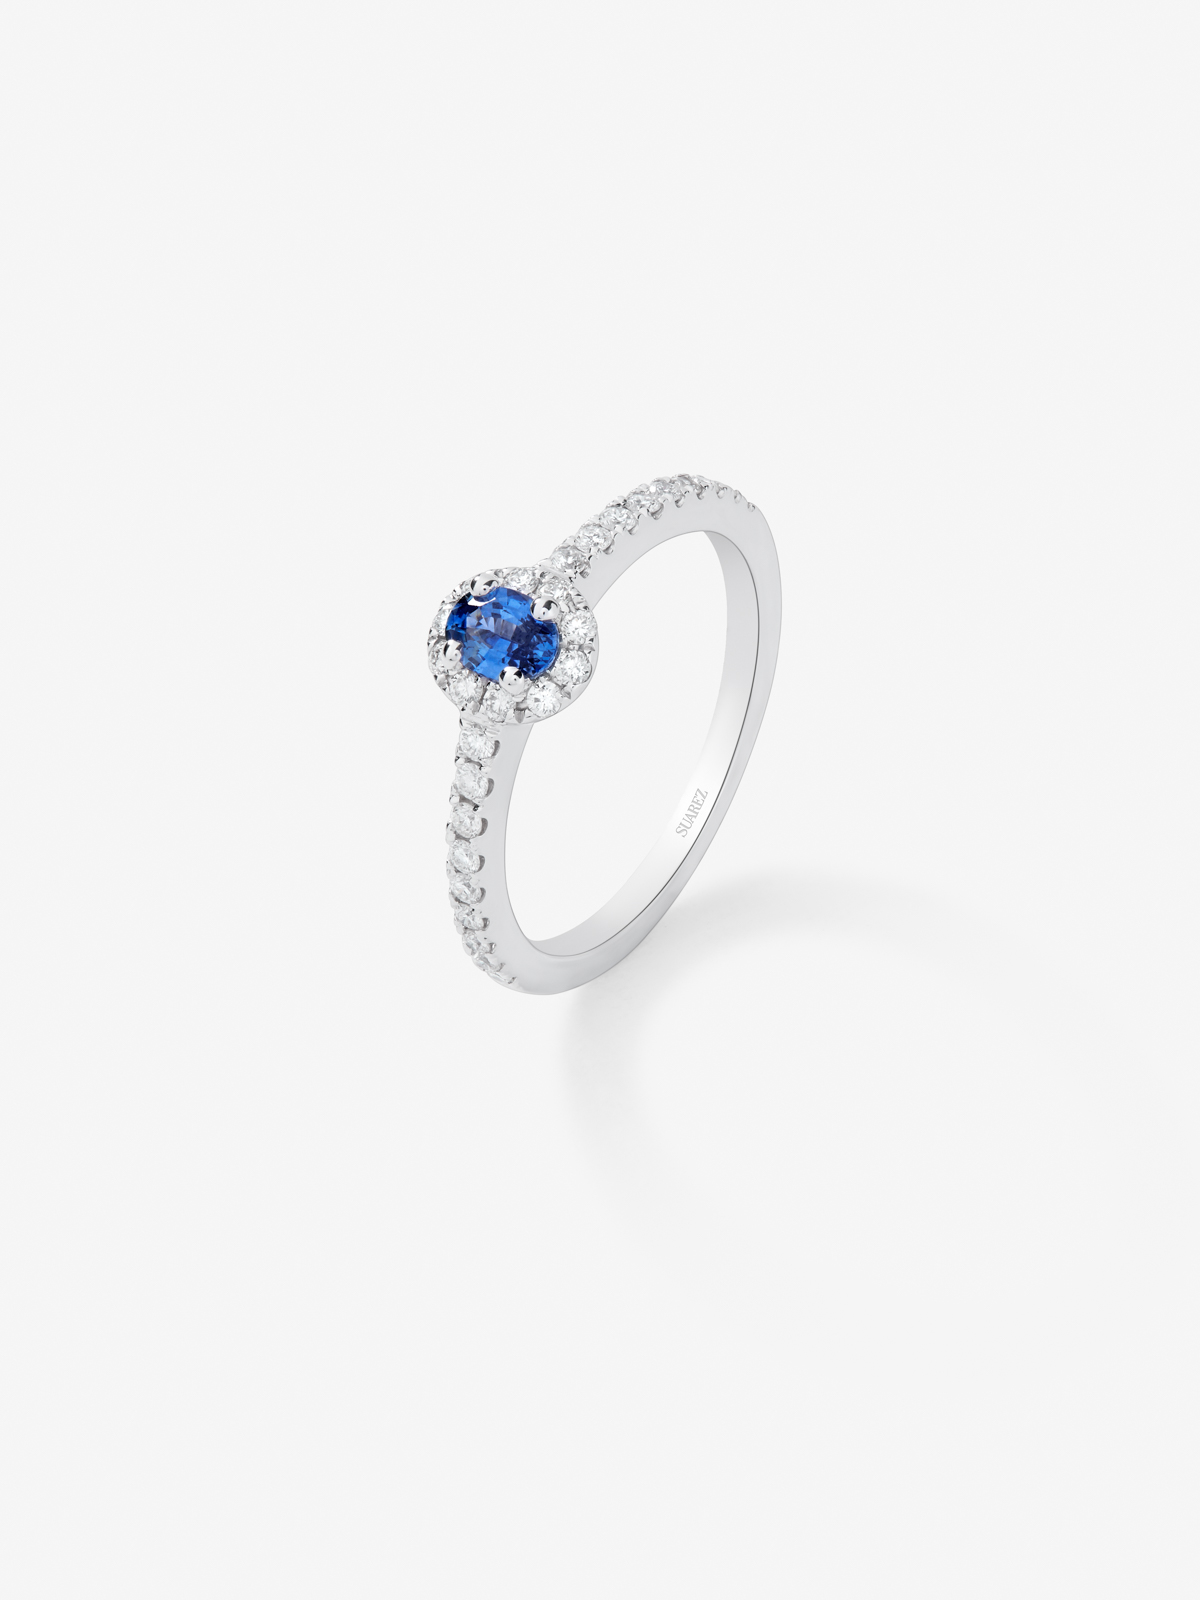 Anillo de oro blanco de 18K con zafiro azul en talla oval de 0,25 cts y diamantes en talla brillante de 0,24 cts